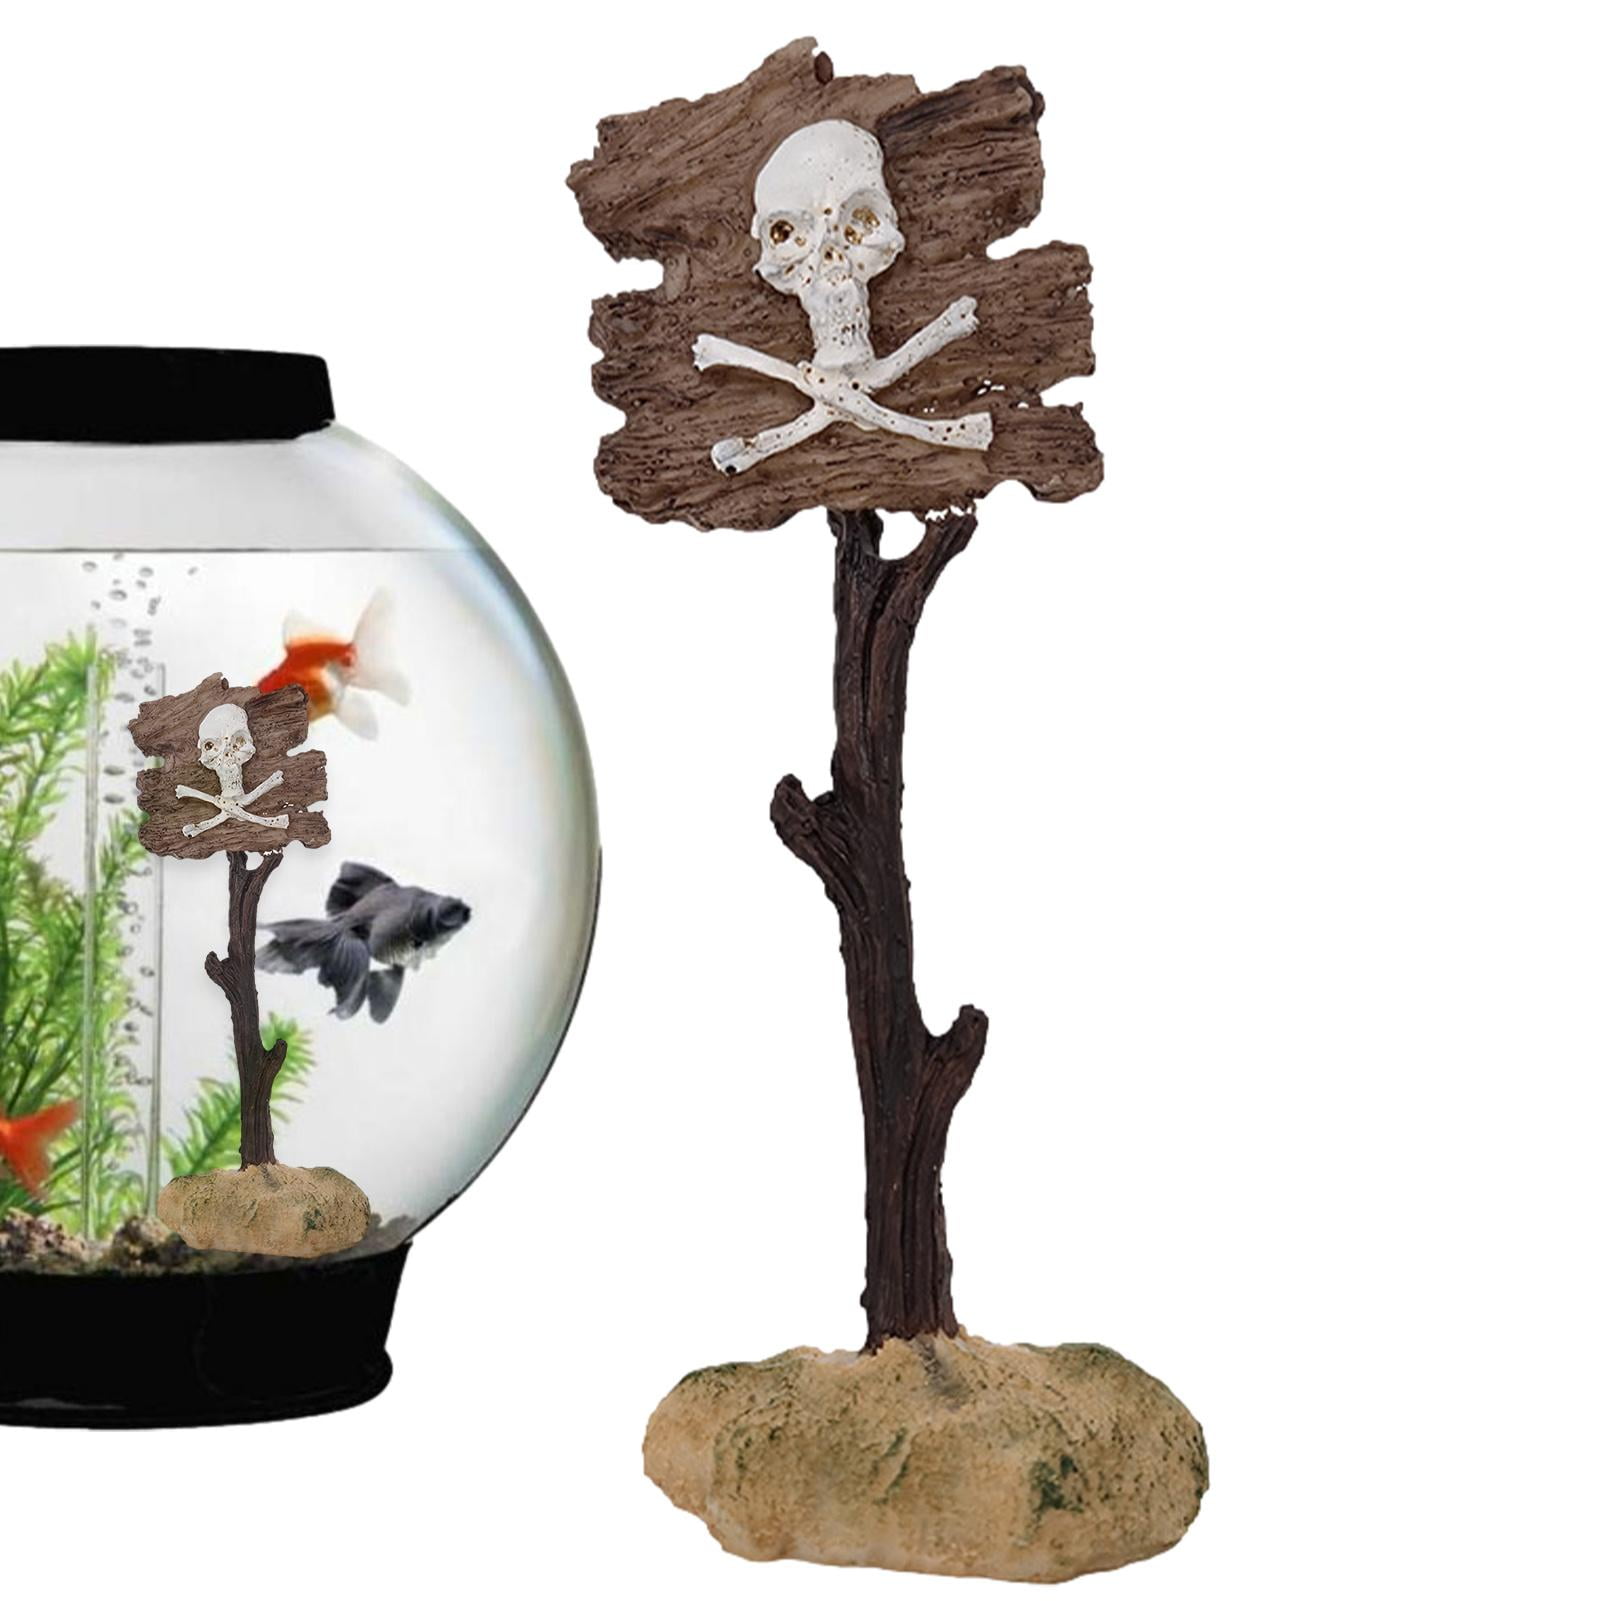 Fish Tank Warning Signs | Resin Fish Tank Decorations | Funny Aquarium Fish Tank Decor for Aquarium Fish Tank Landscape Scenery - Walmart.com